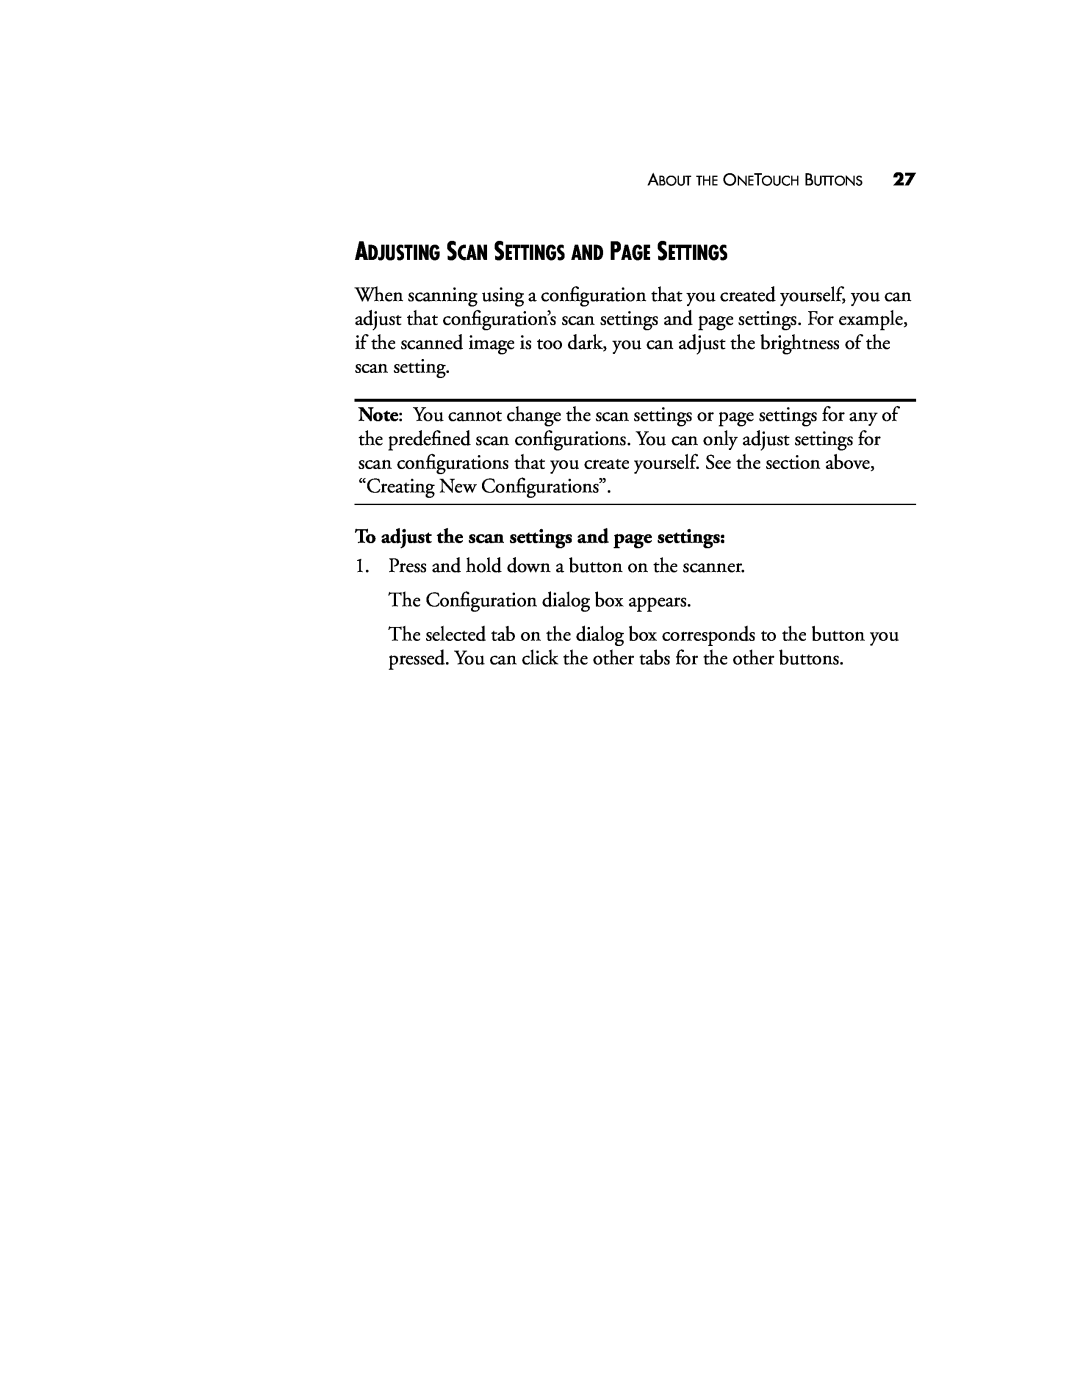 Visioneer 8100 manual Adjusting Scan Settings And Page Settings, To adjust the scan settings and page settings 